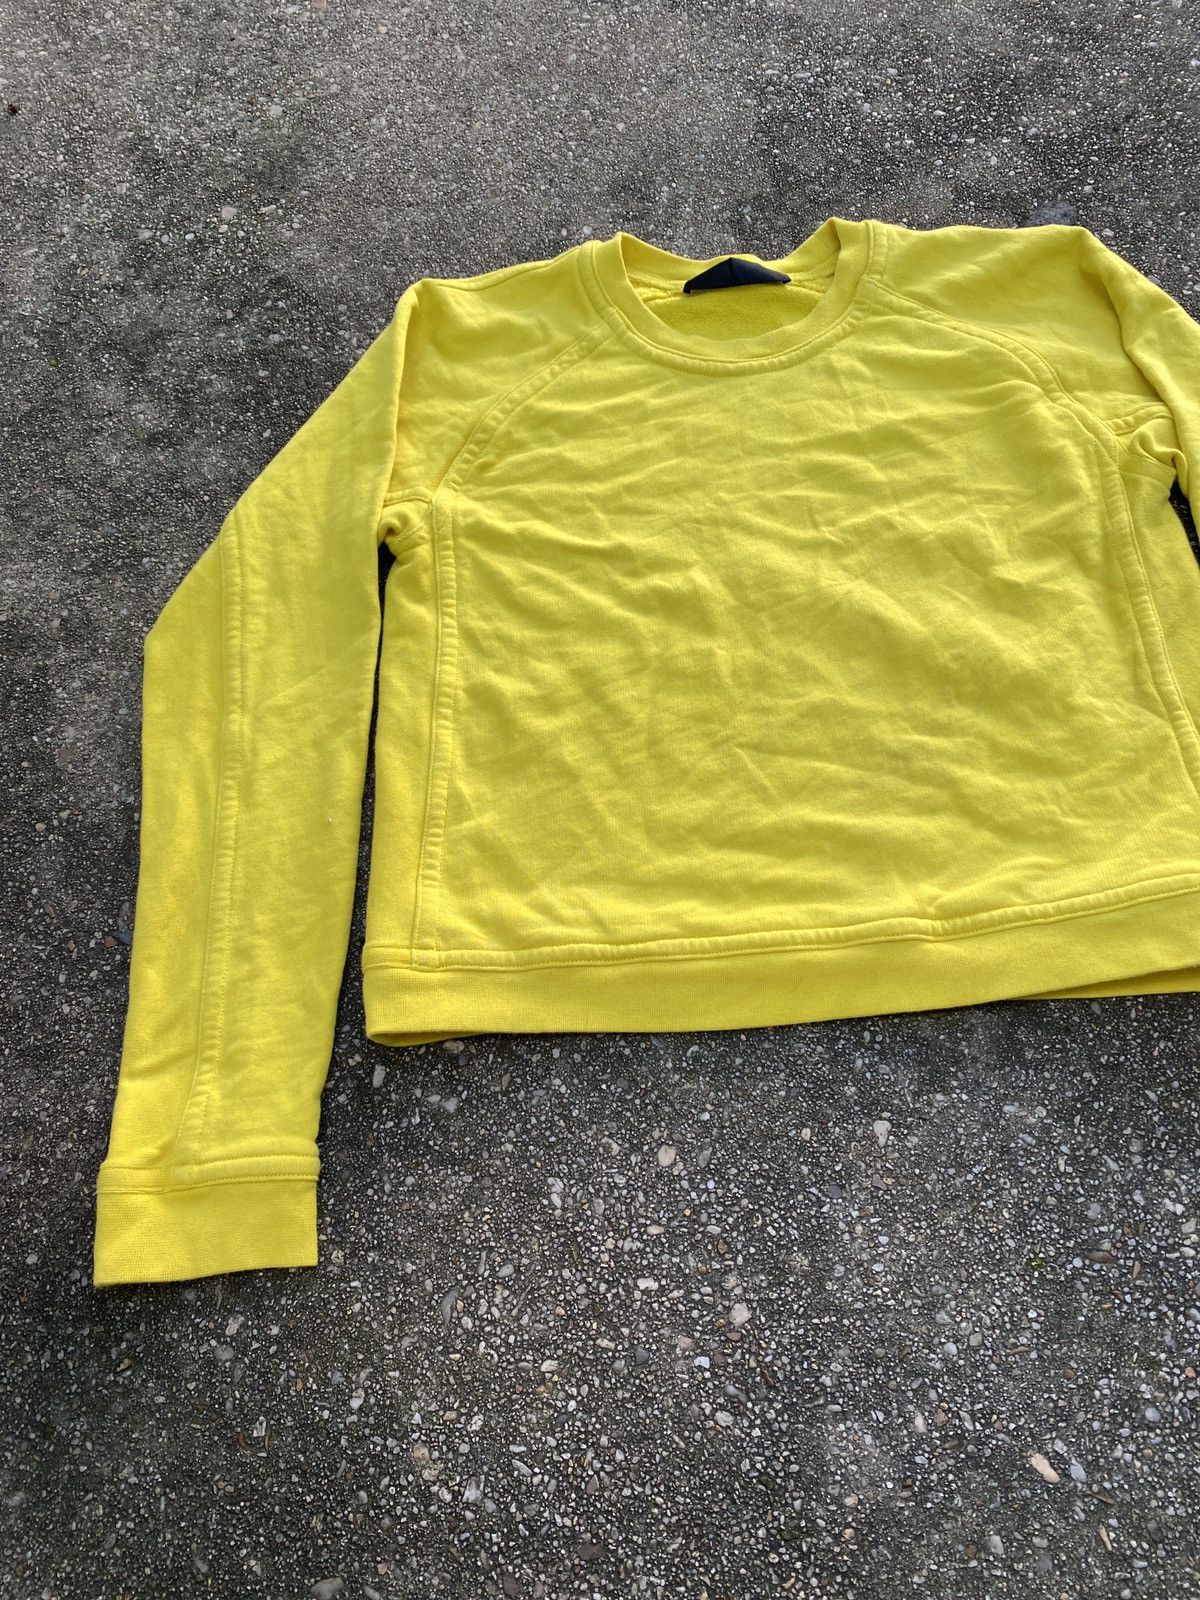 Haider Ackermann Haider Ackermann Indigo Cropped Sweatshirt Size US XL / EU 56 / 4 - 2 Preview